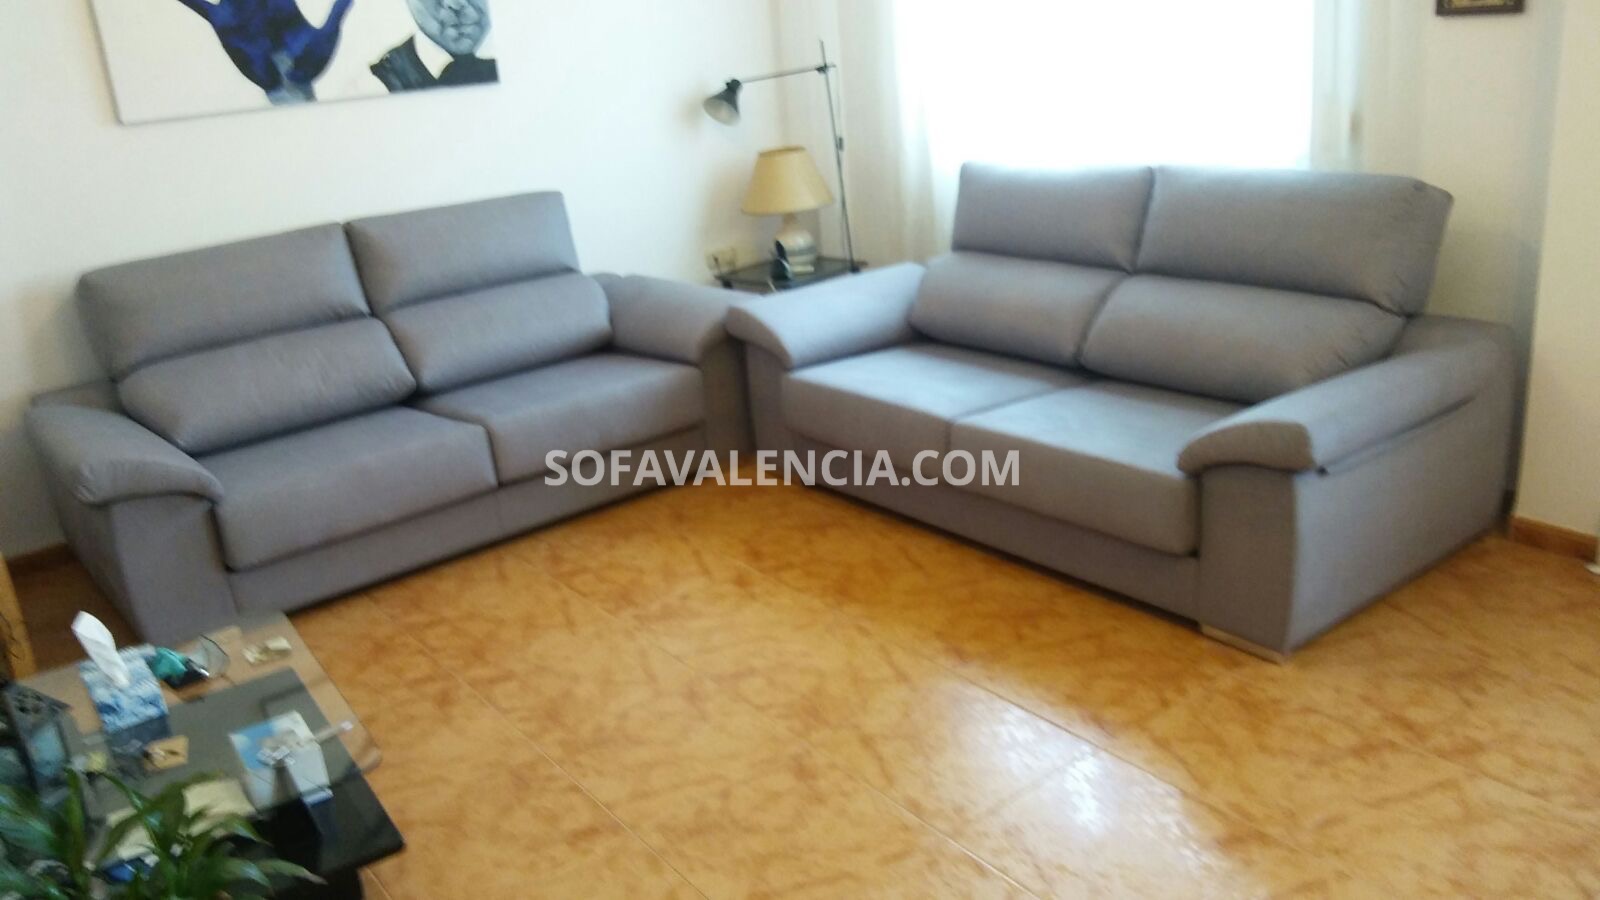 sofa-valencia-fotos-clientes-39